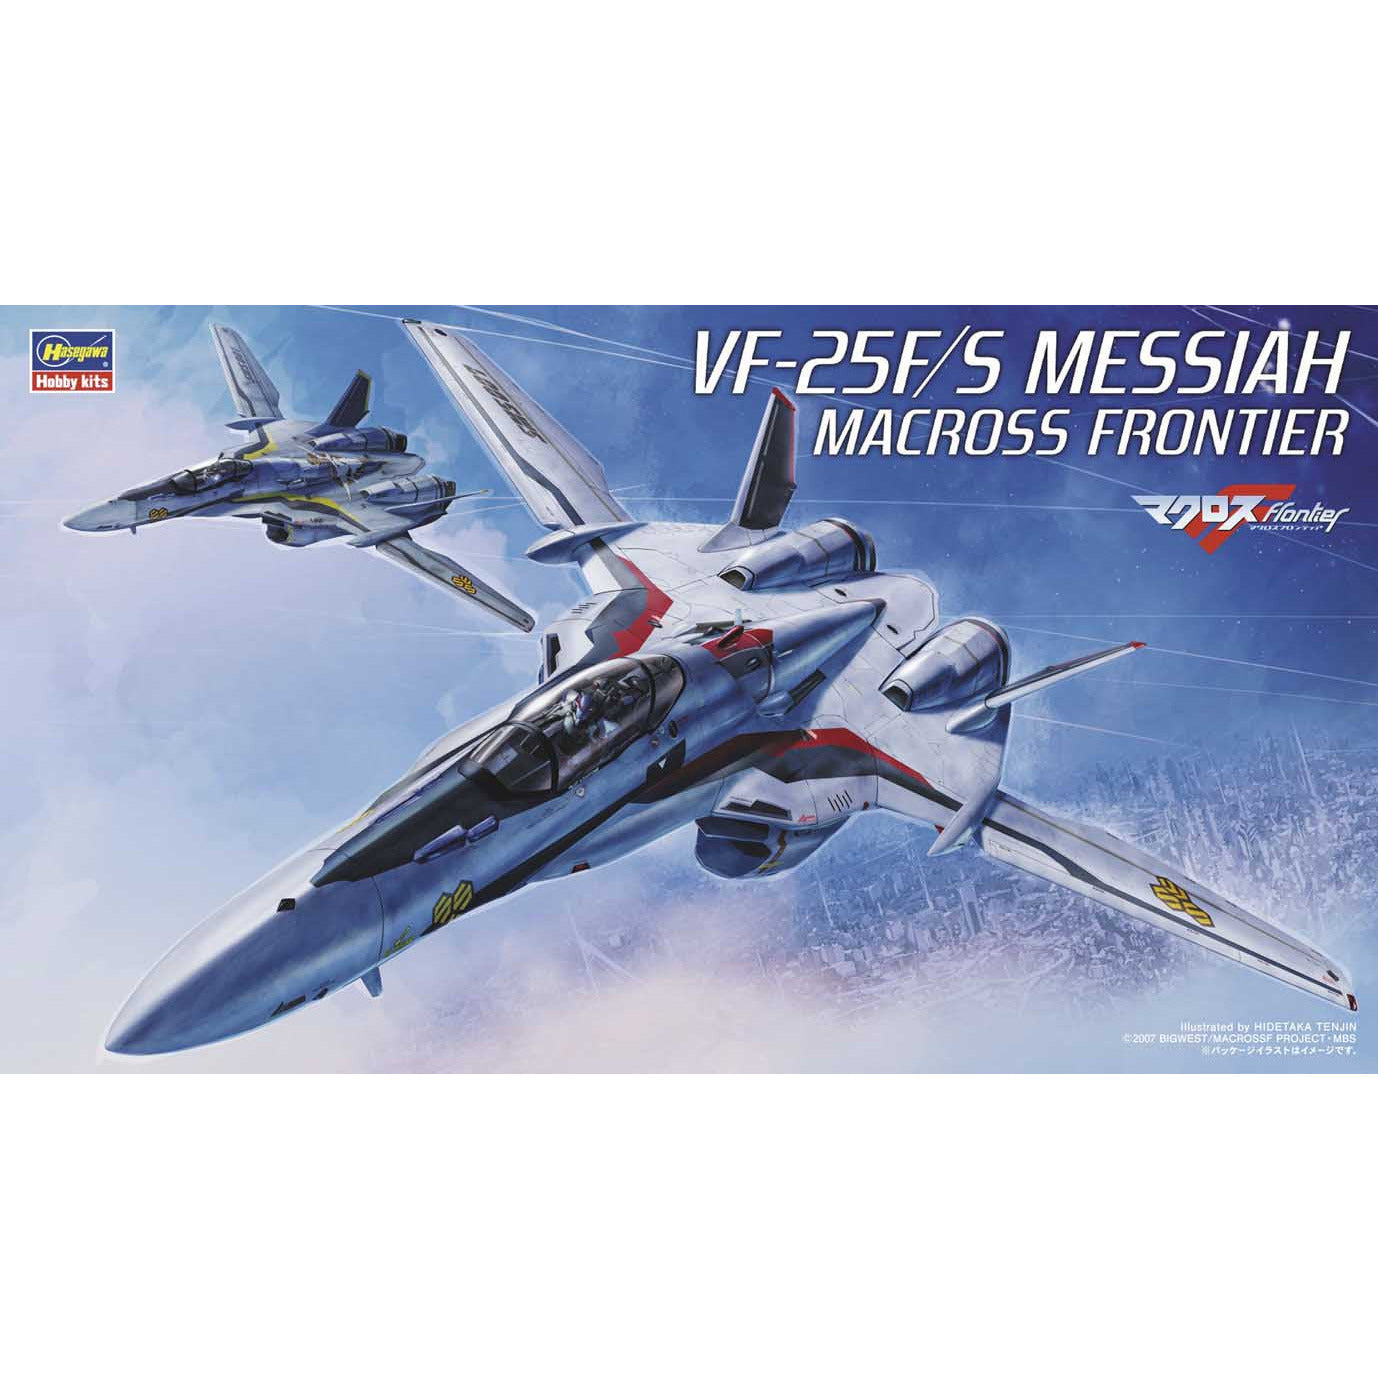 Macross Frontier VF-25F/S Messiah 1/72 #65724 by Hasegawa